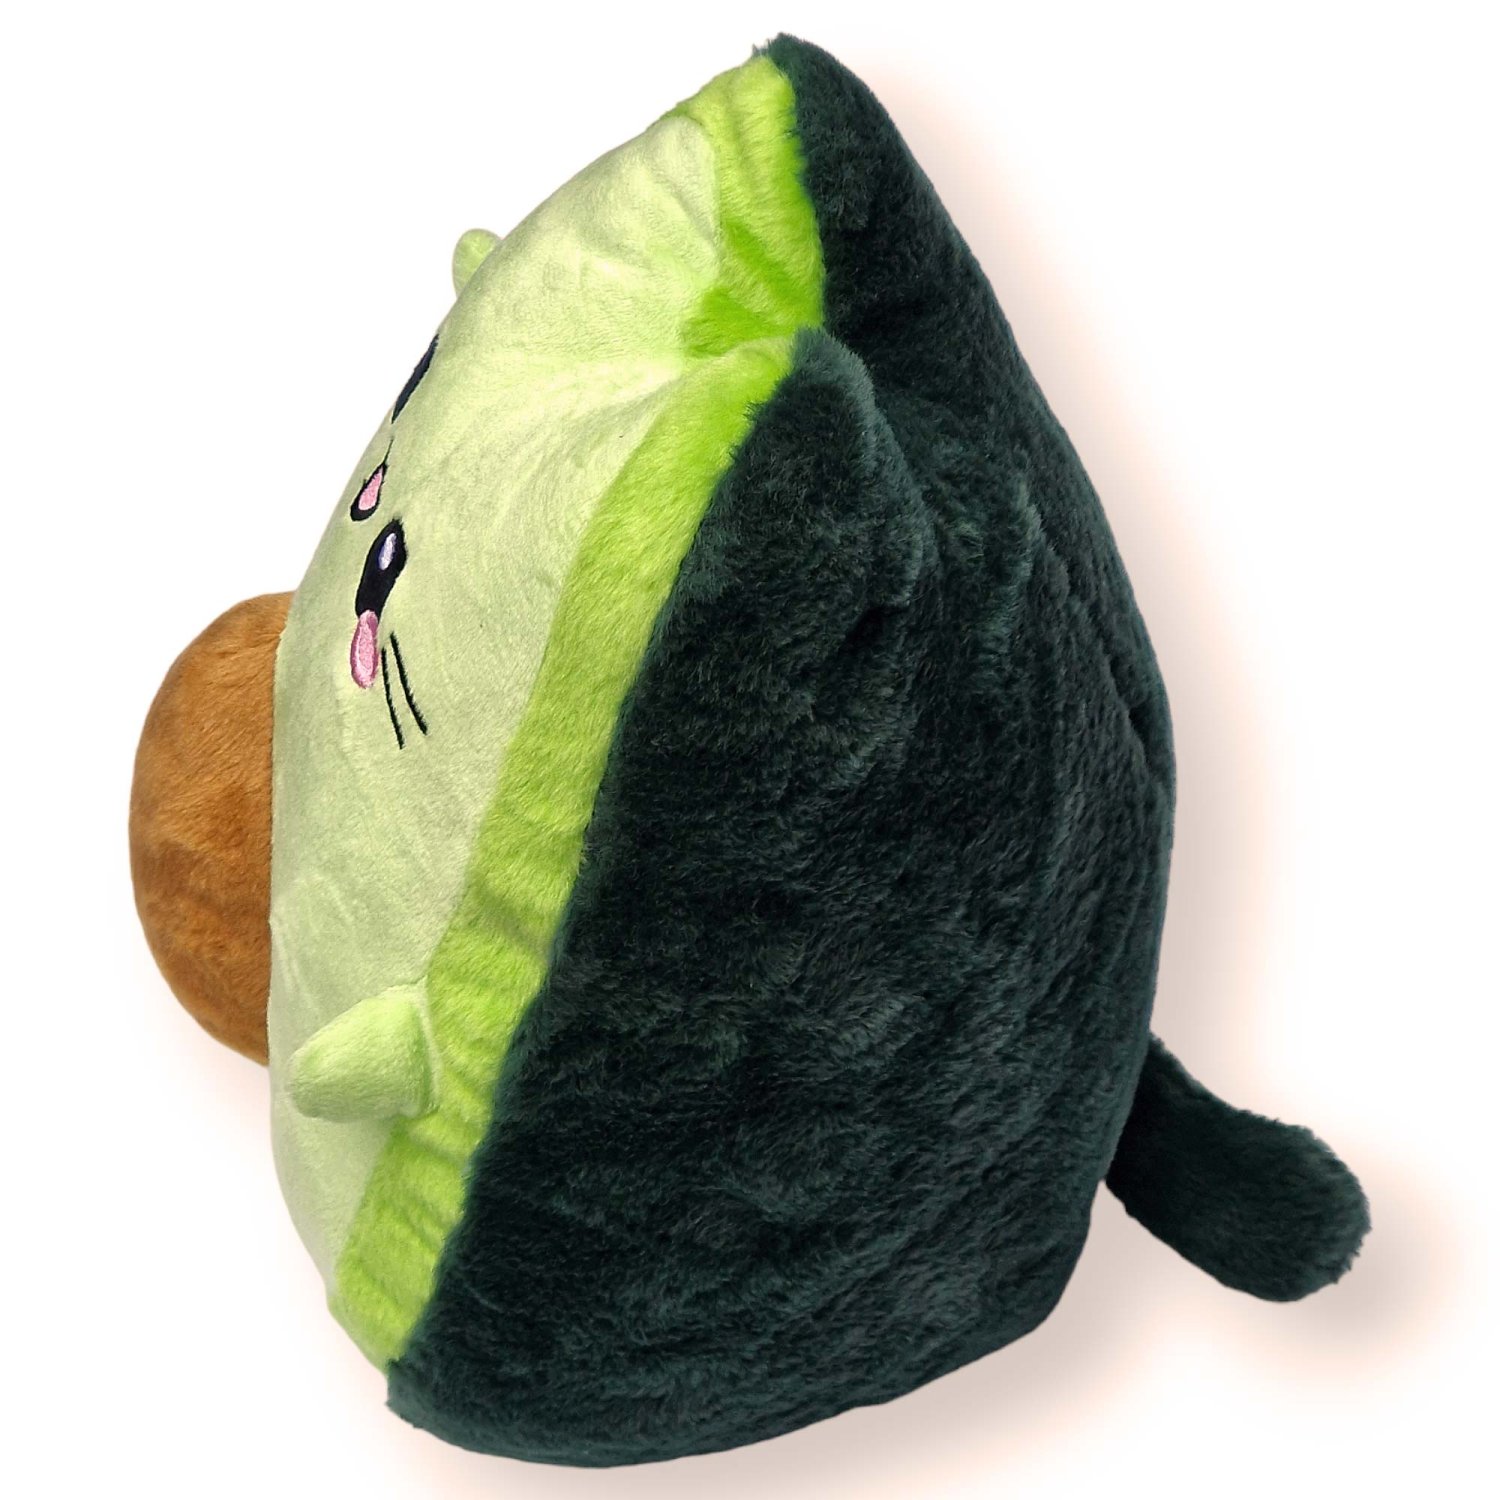 Avocado Cat Plush Pillow Emoticon Toy Cushion